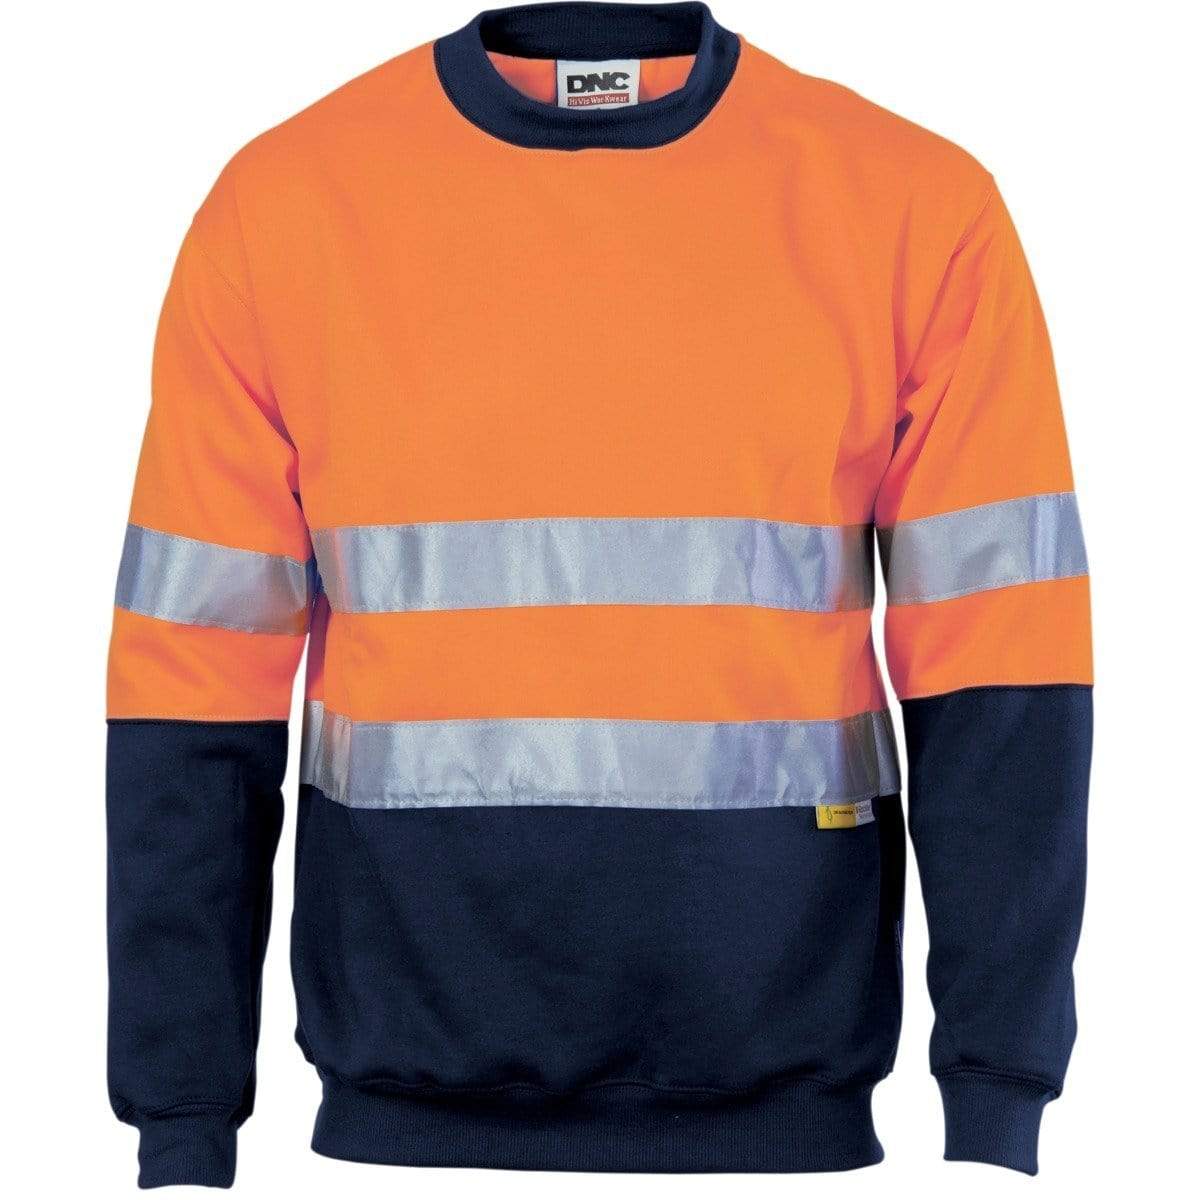 Dnc Workwear Hi-vis Two-tone Fleecy Crew-neck Sweatshirt (Sloppy Joe) With 3m R/tape - 3824 Work Wear DNC Workwear Orange/Navy 5XL 